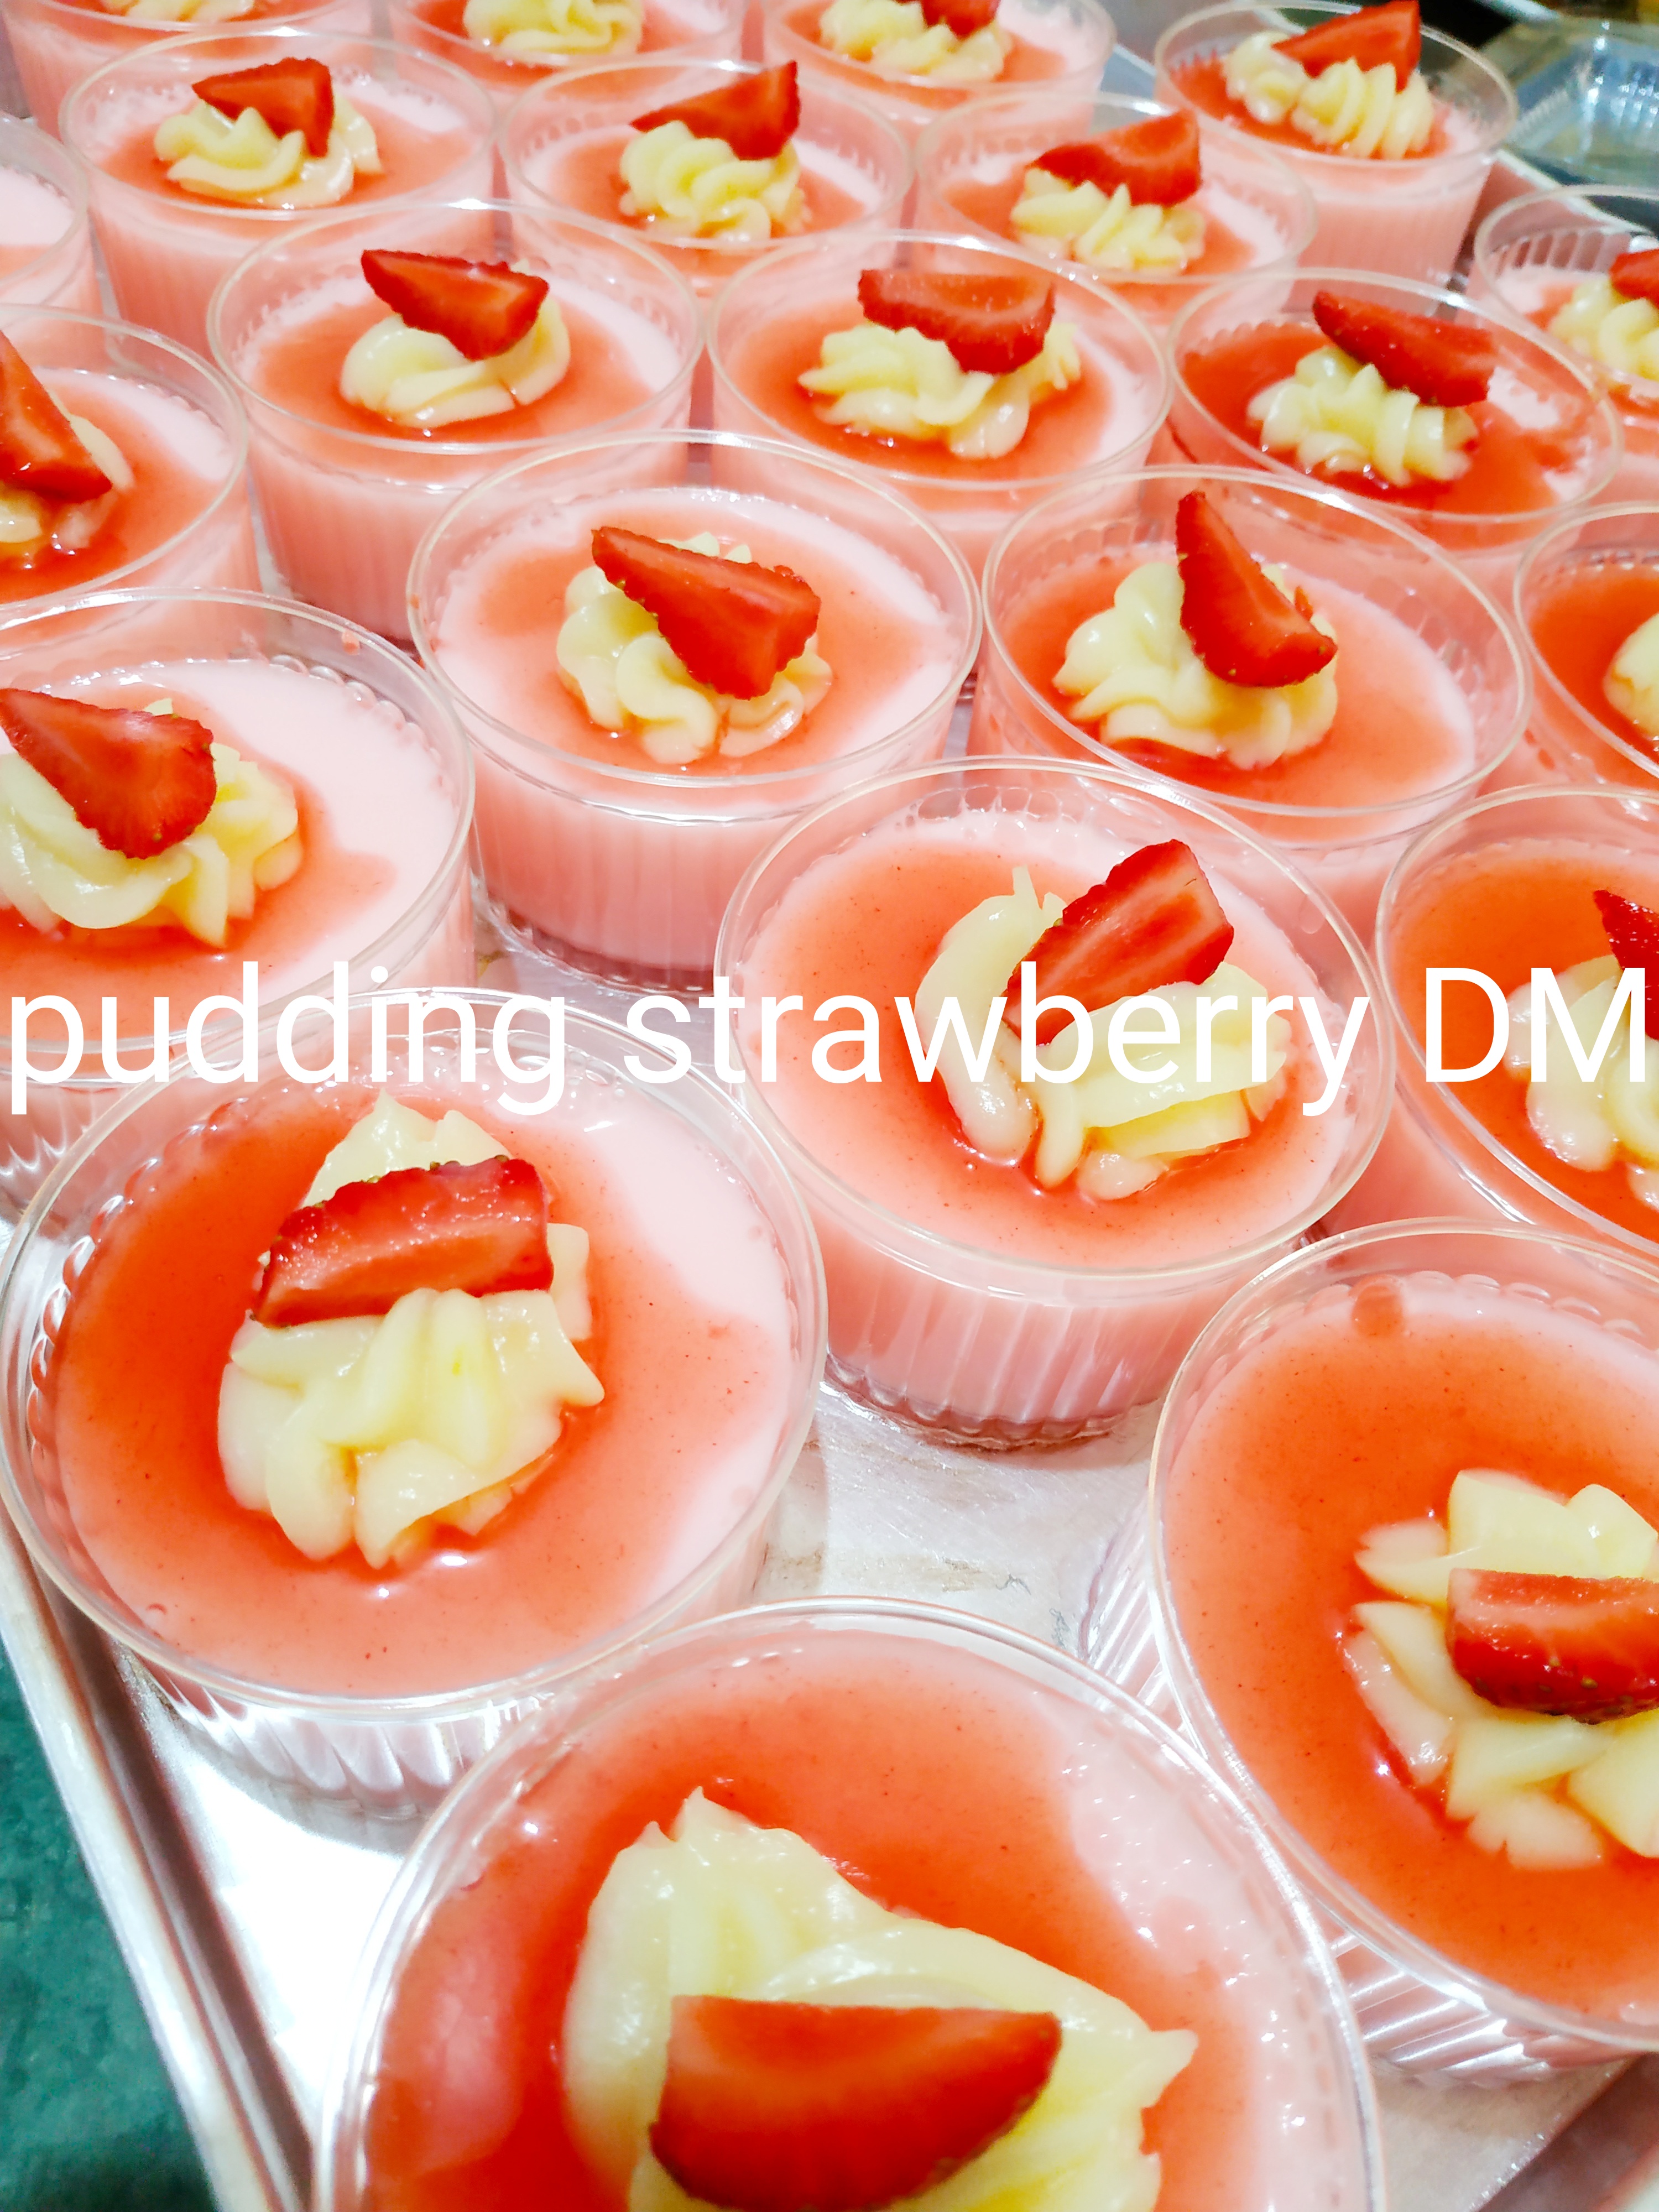 Pudding strawberry